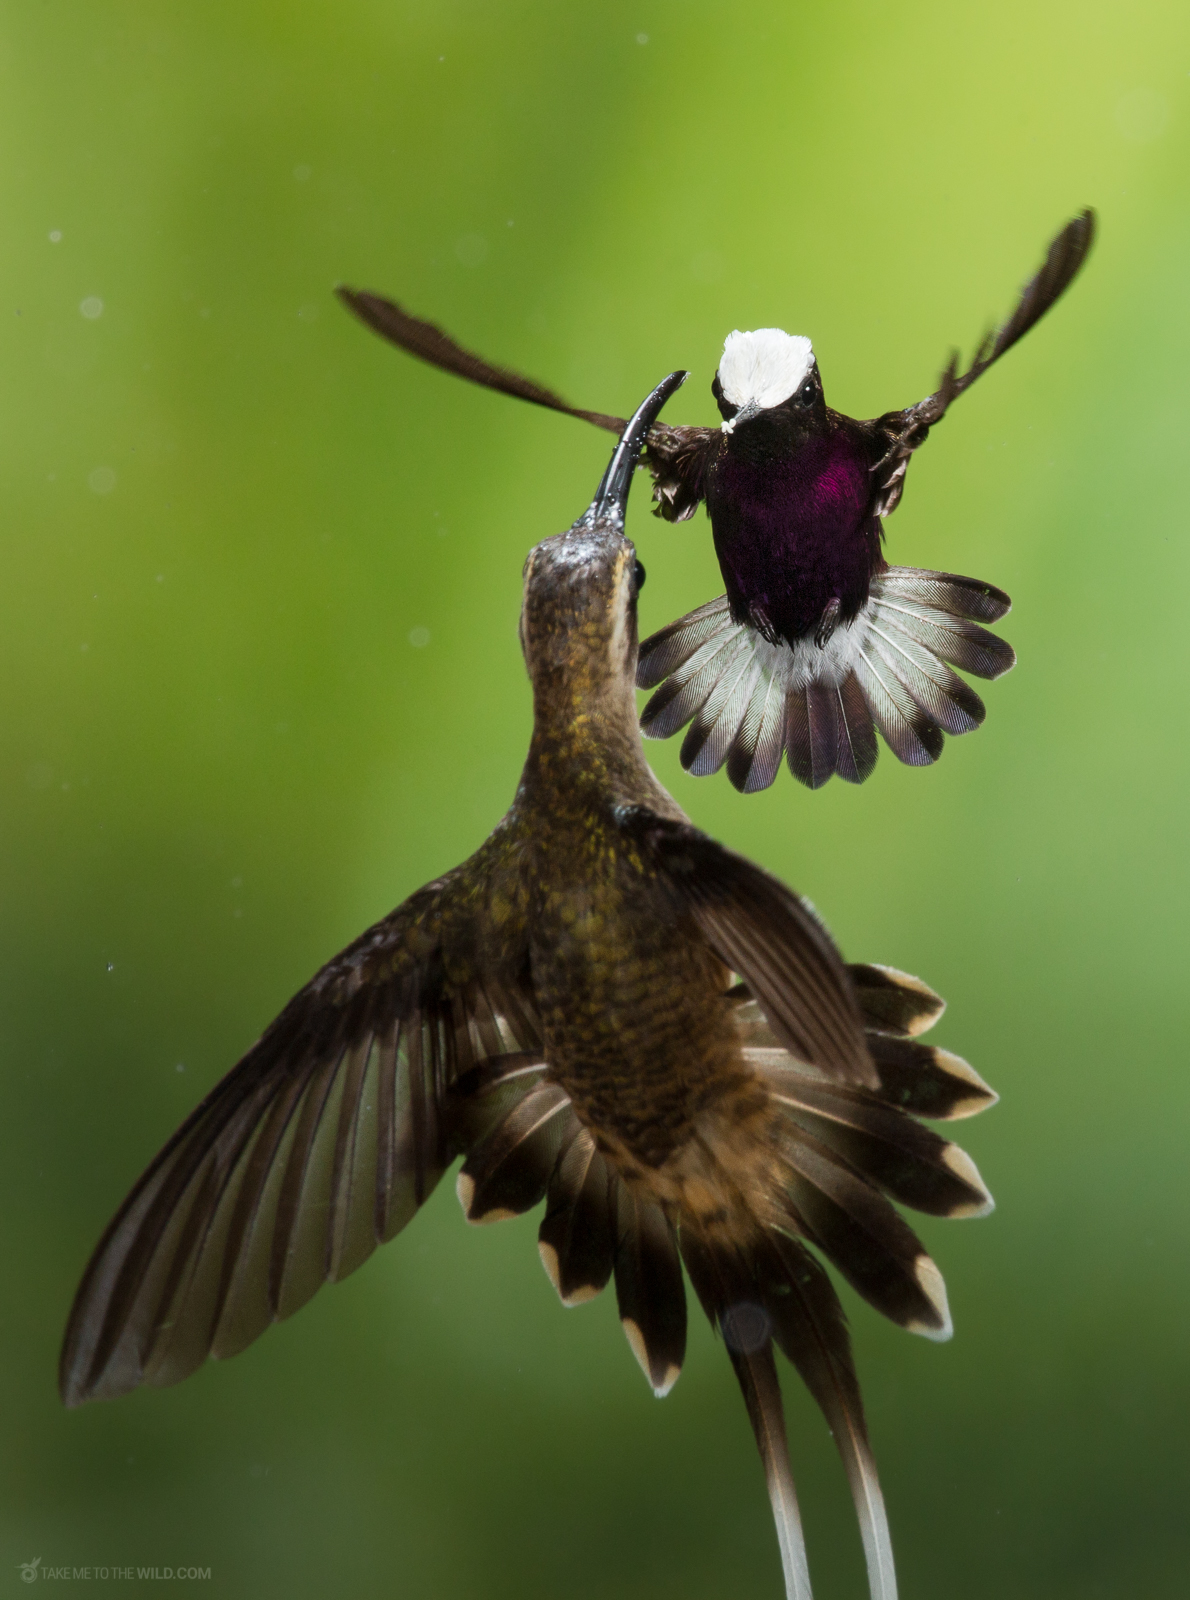 Snowcap (Microchera albocoronata) male defending his territory in flight at the low lands of Costa Rica, Guapiles, Cope Wildlife